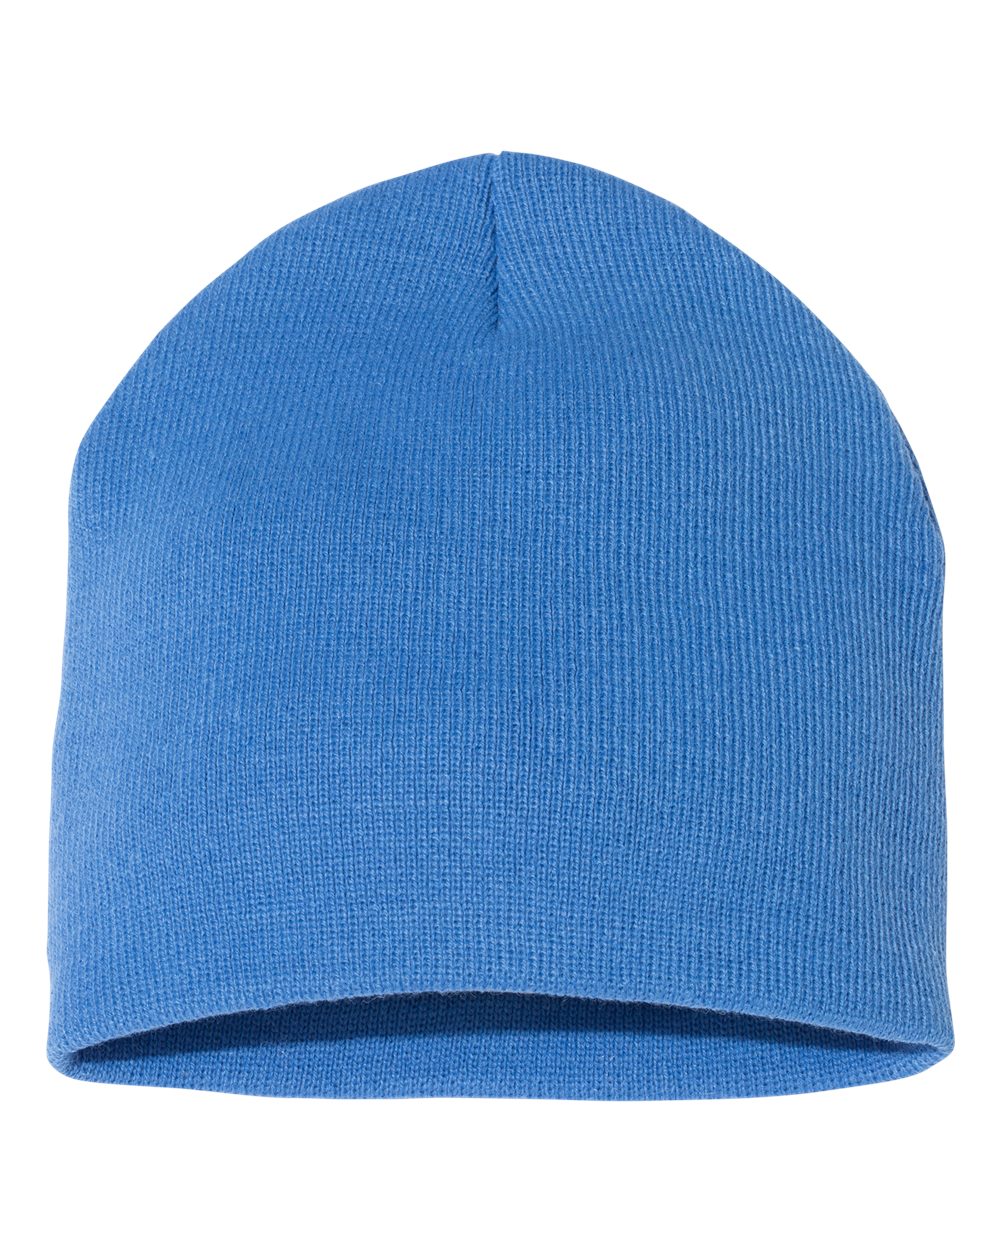 YP Classics Short Beanie Winter Hat 1500KC 8-1/2 inch | eBay